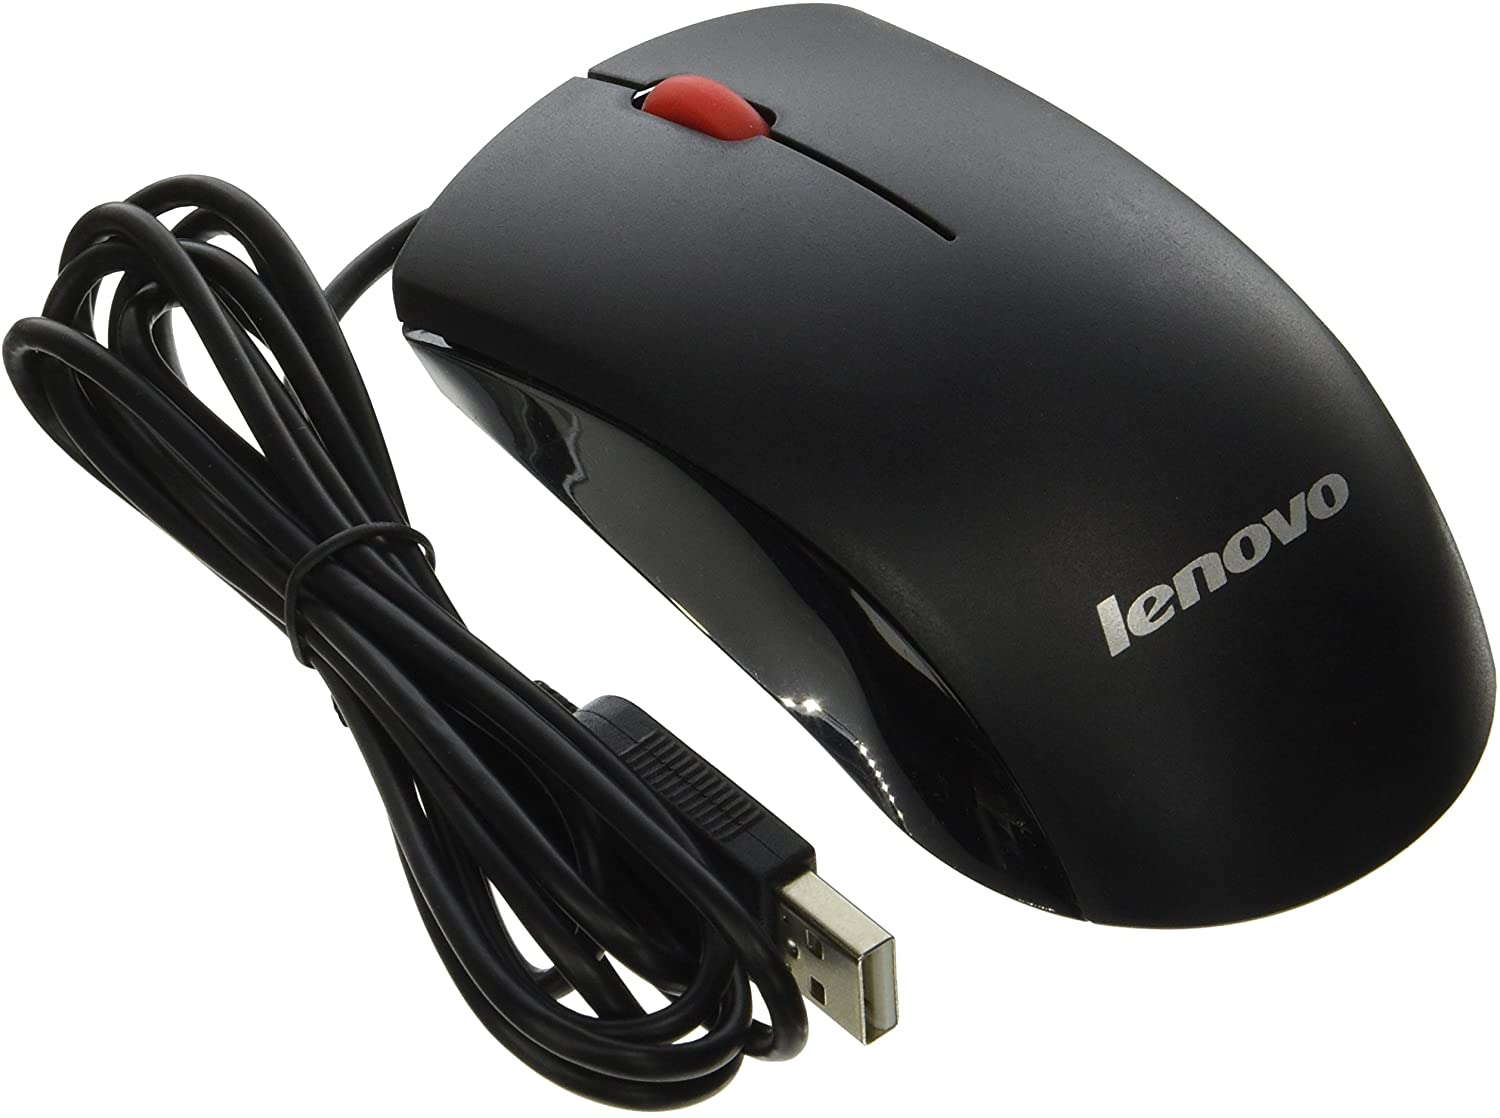 Mouse / Ratón Optico Lenovo, USB, 2 botones, Negro y rojo,  Rueda Scroll, Cod: 45J4888